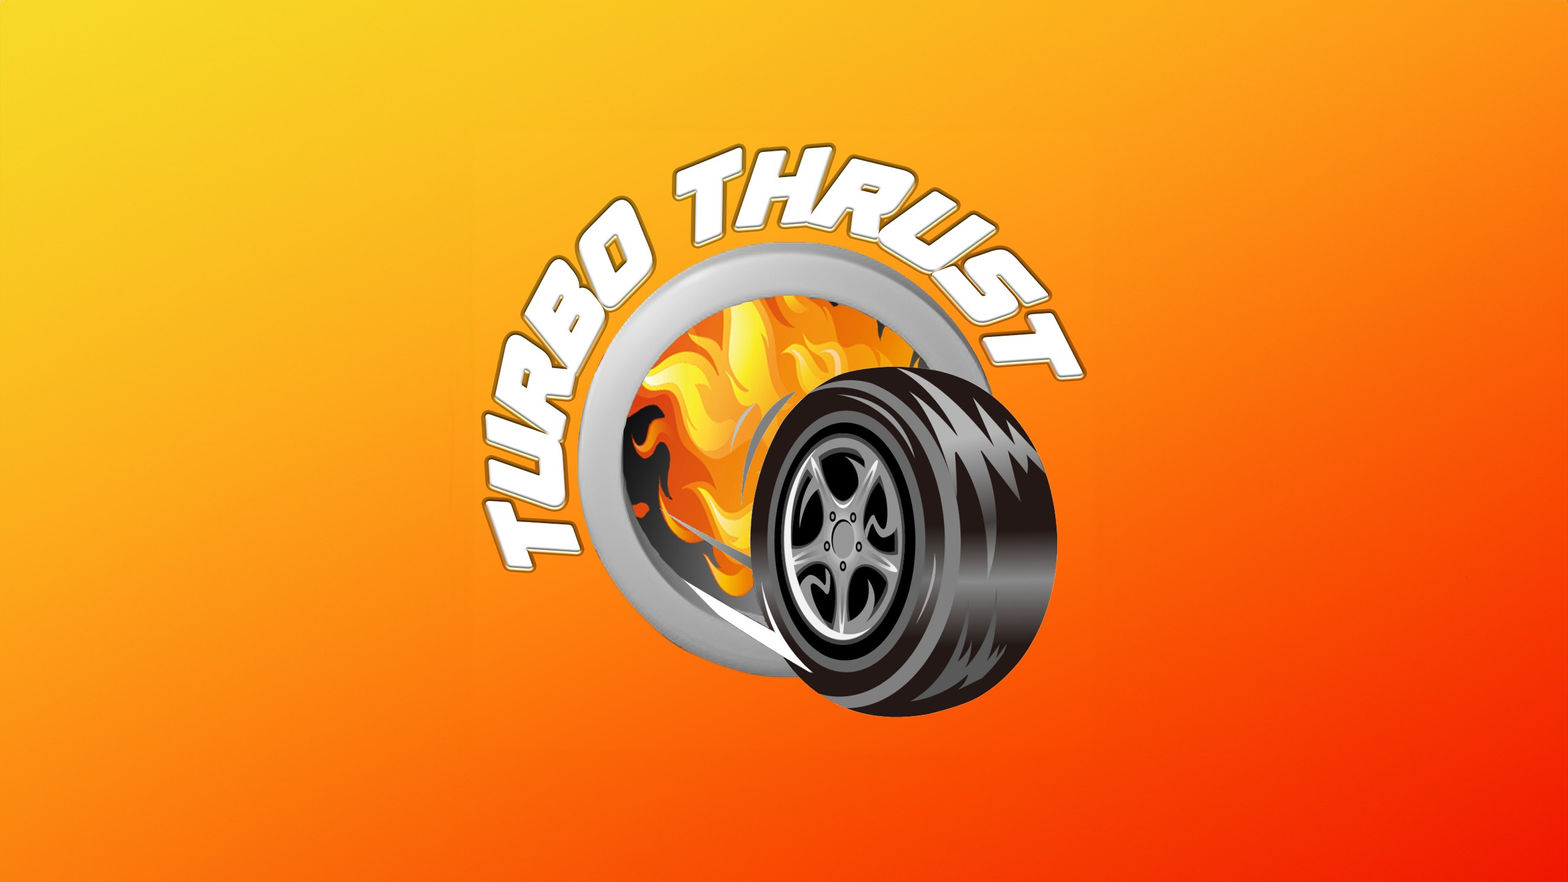 Turbo Thrust